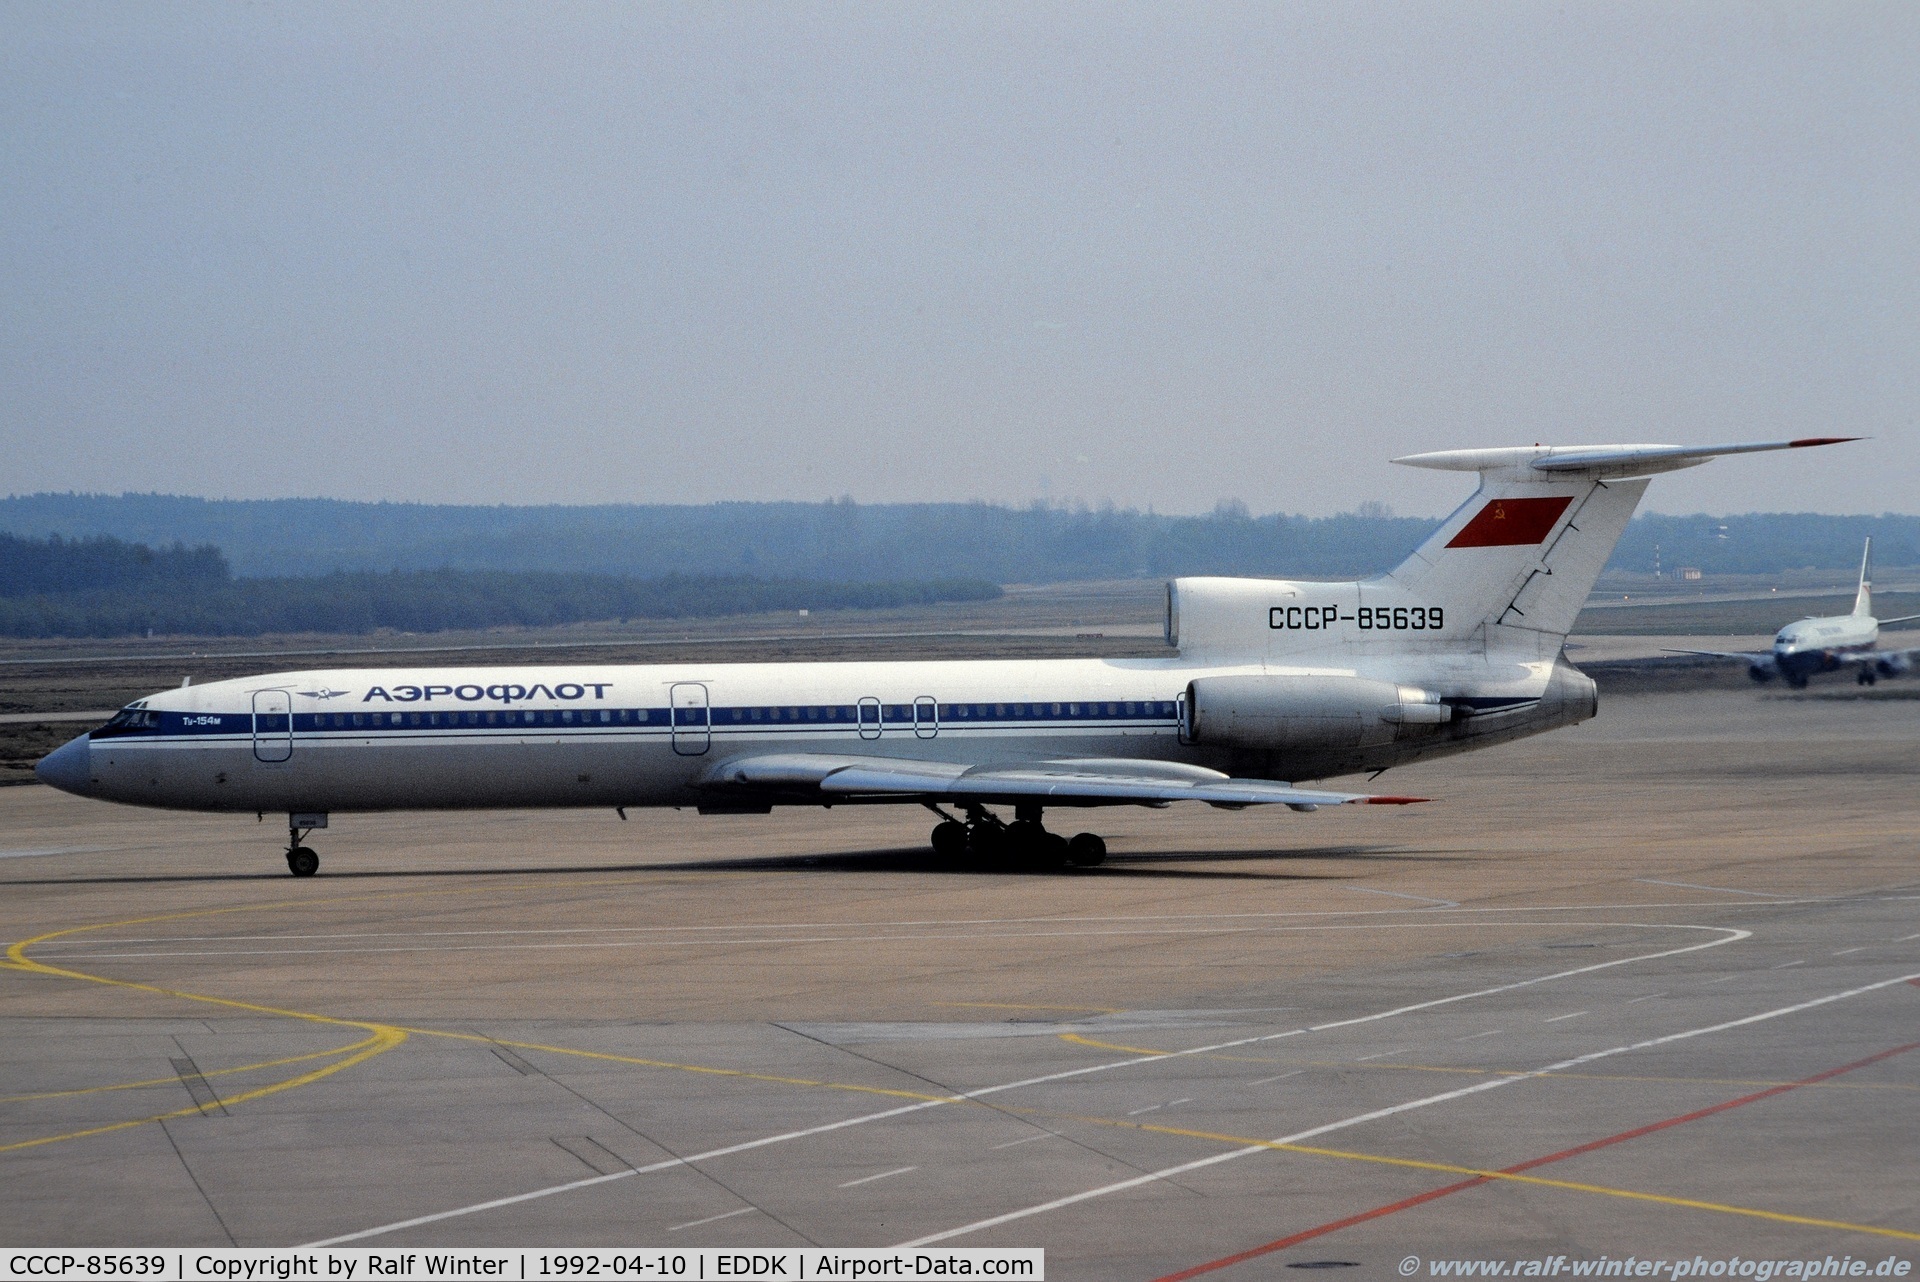 CCCP-85639, 1988 Tupolev Tu-154M C/N 88A771, Tupolev Tu-154M - Aeroflot - 88A771 - CCCP-85639 - 10.04.1992 - CGN